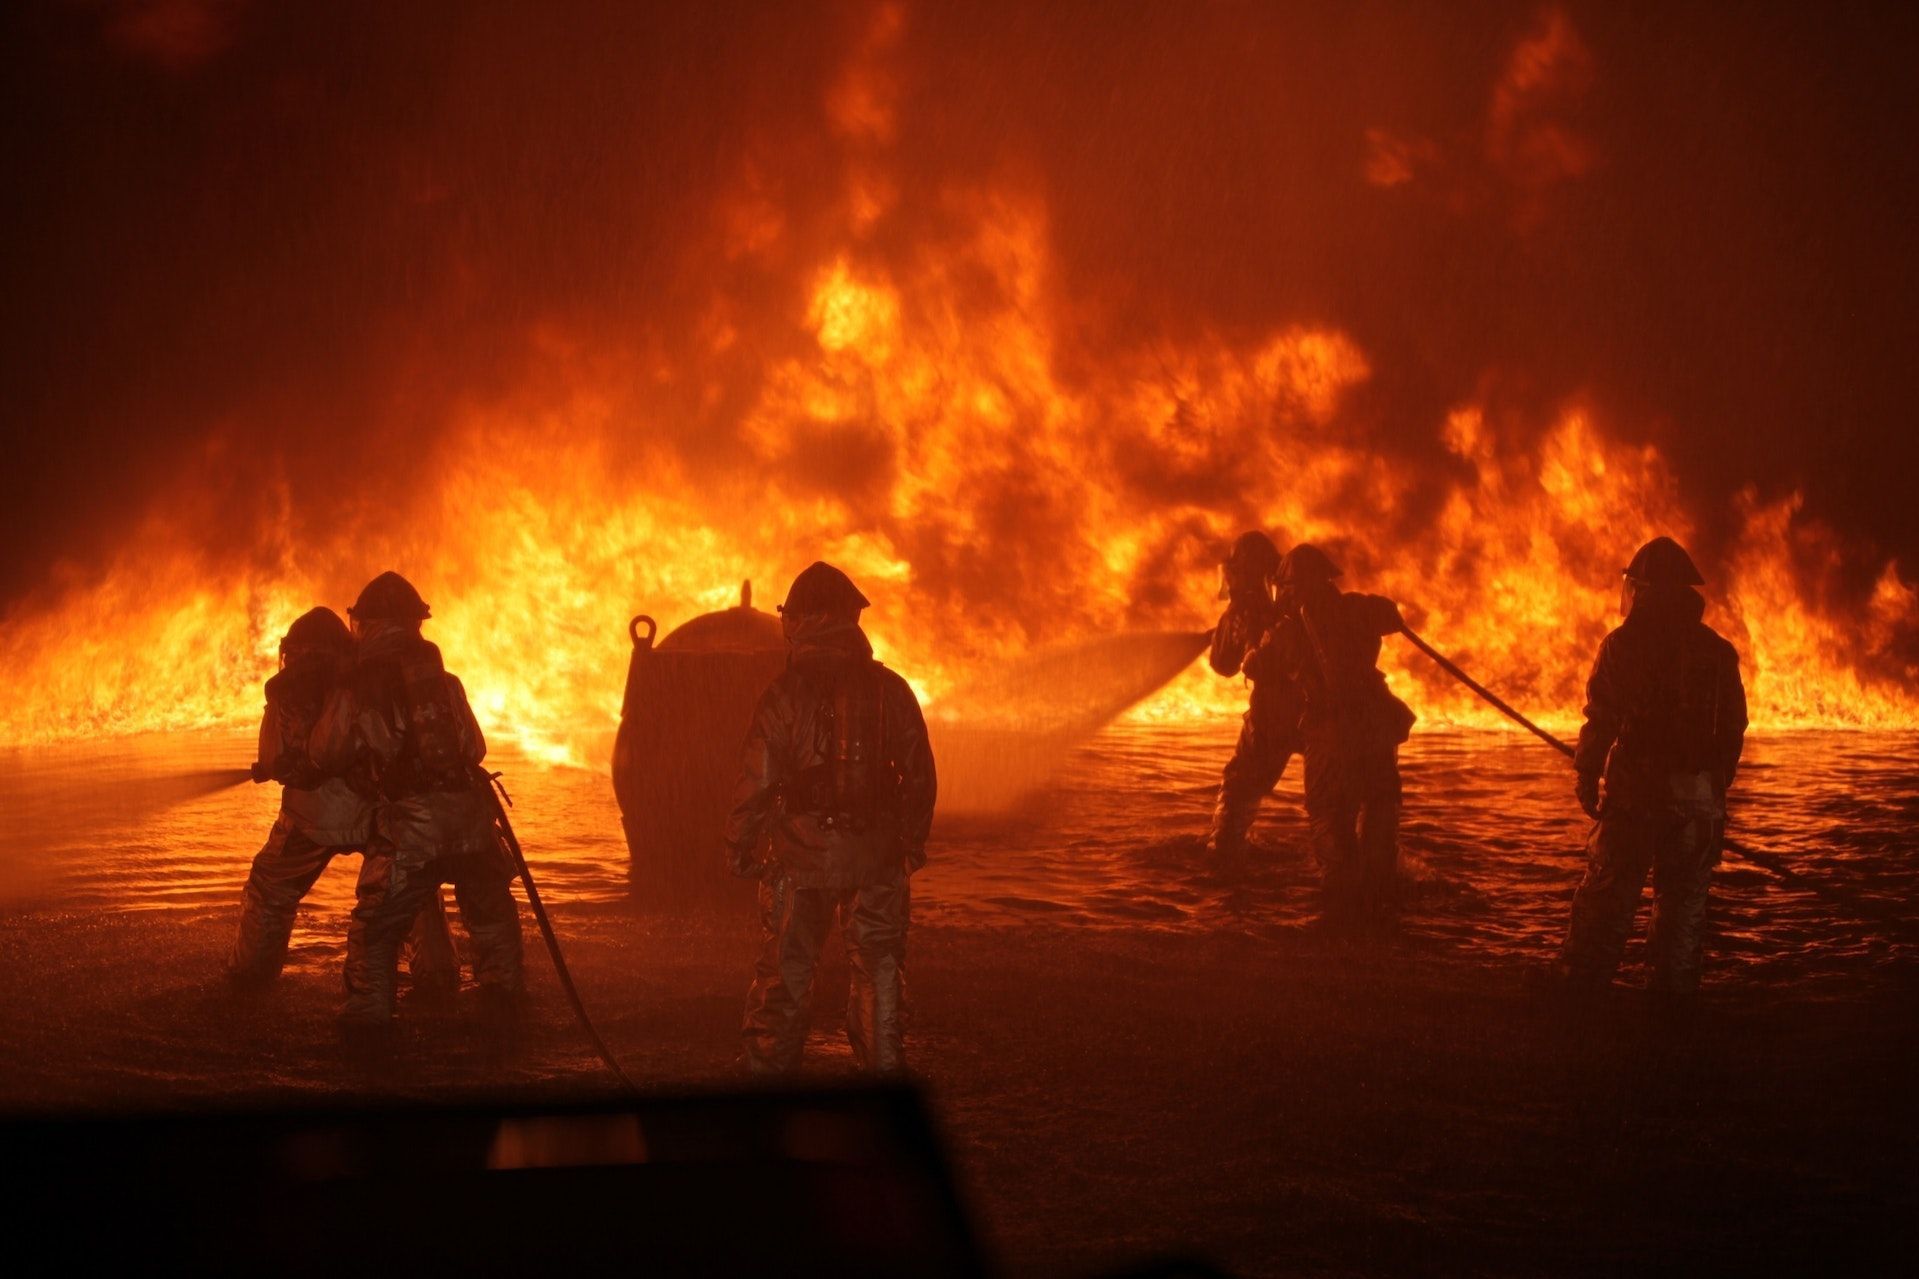 17 квітня в Україні святкують День пожежної охорони / © Pexels